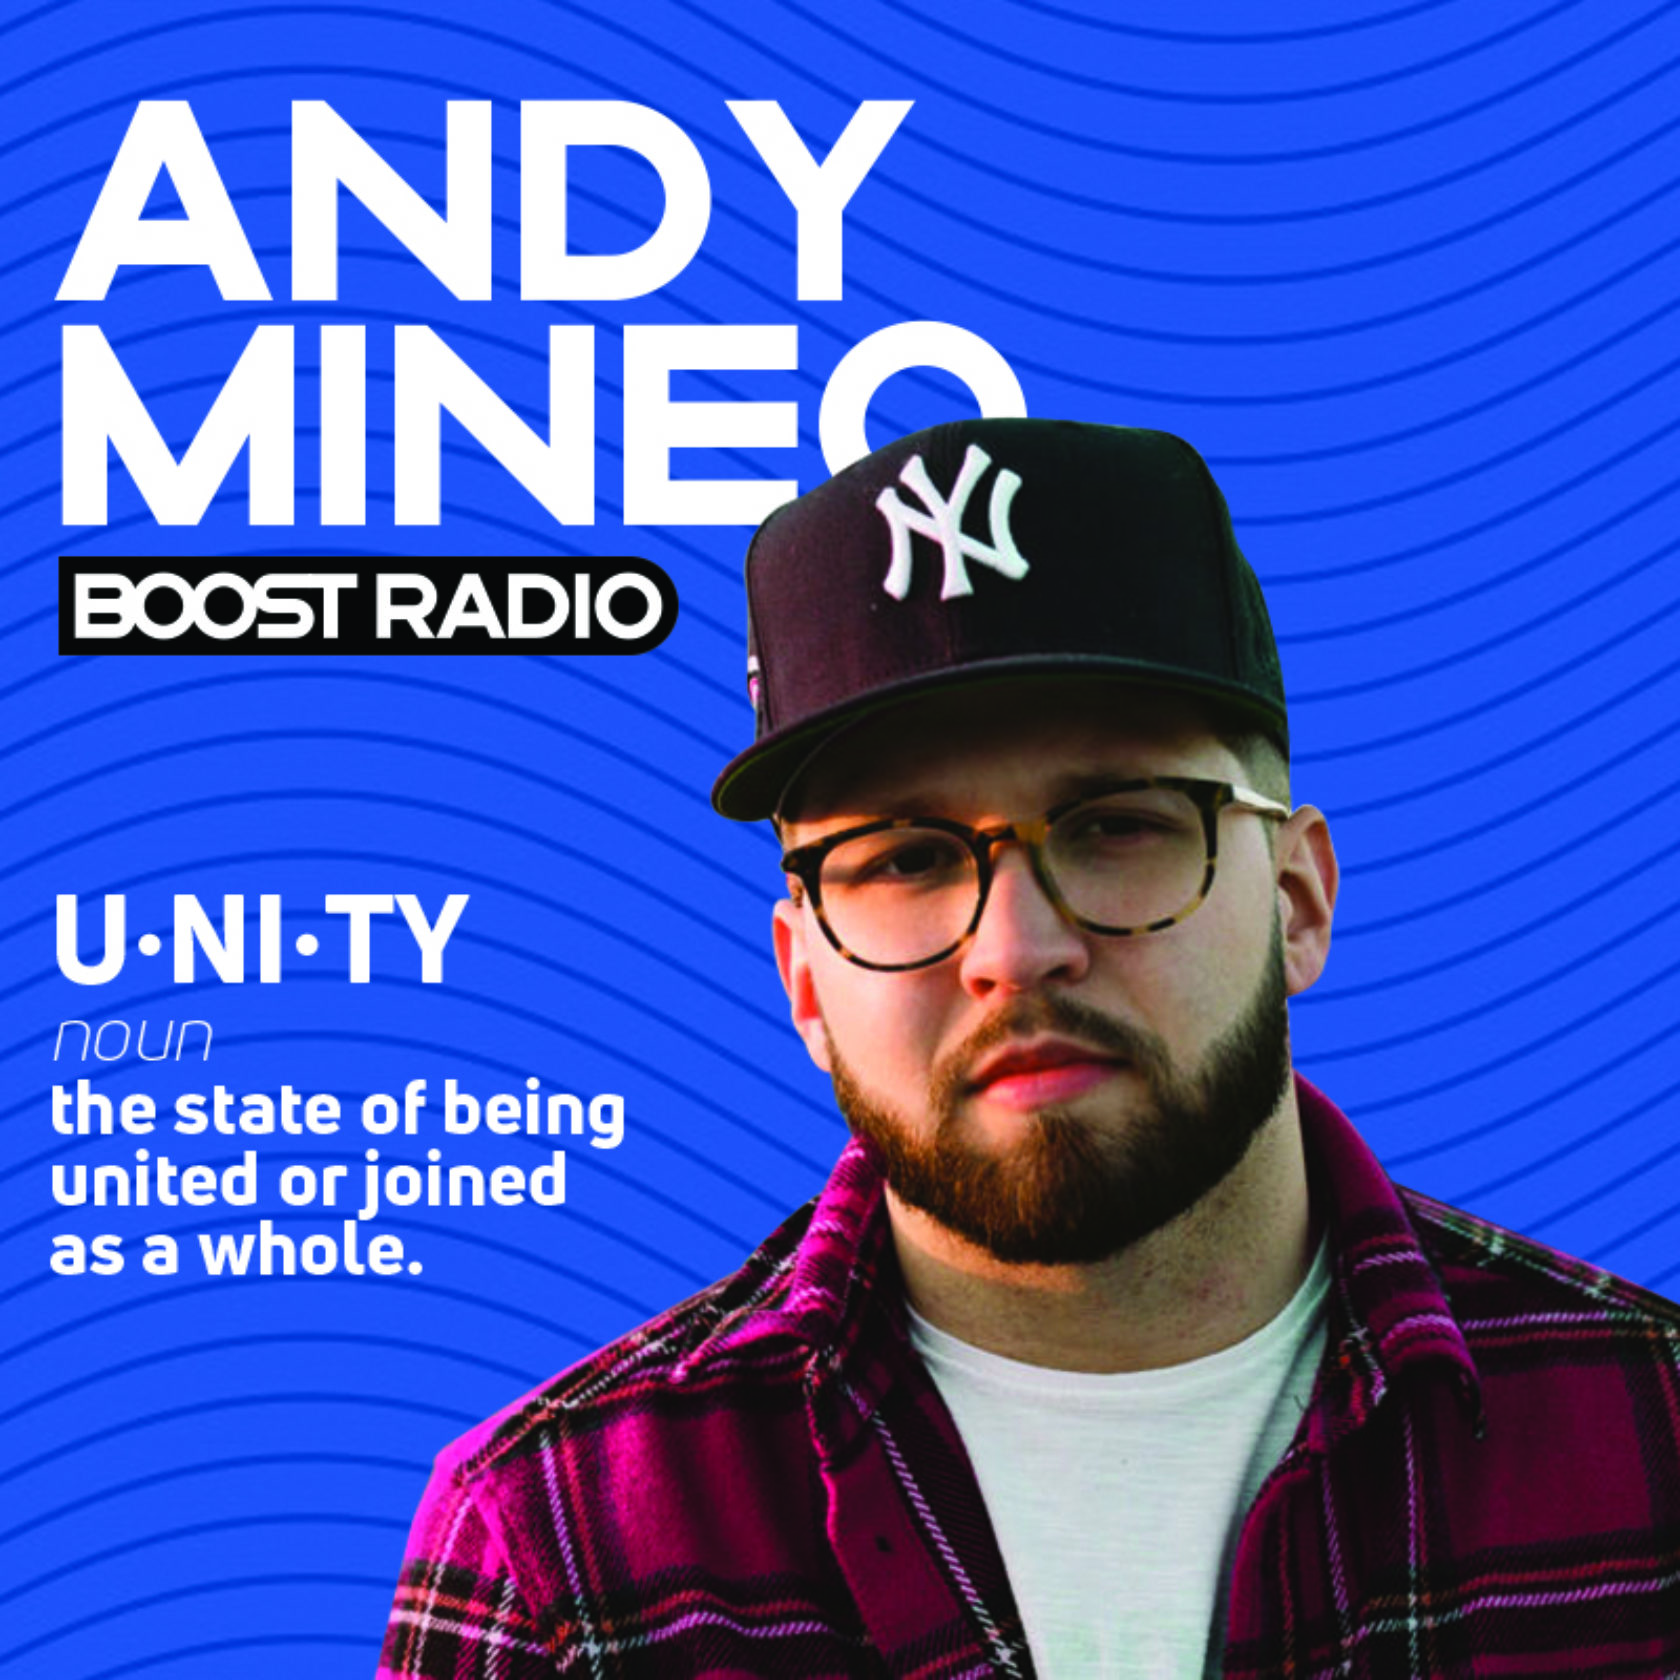 Andy Mineo on Unity